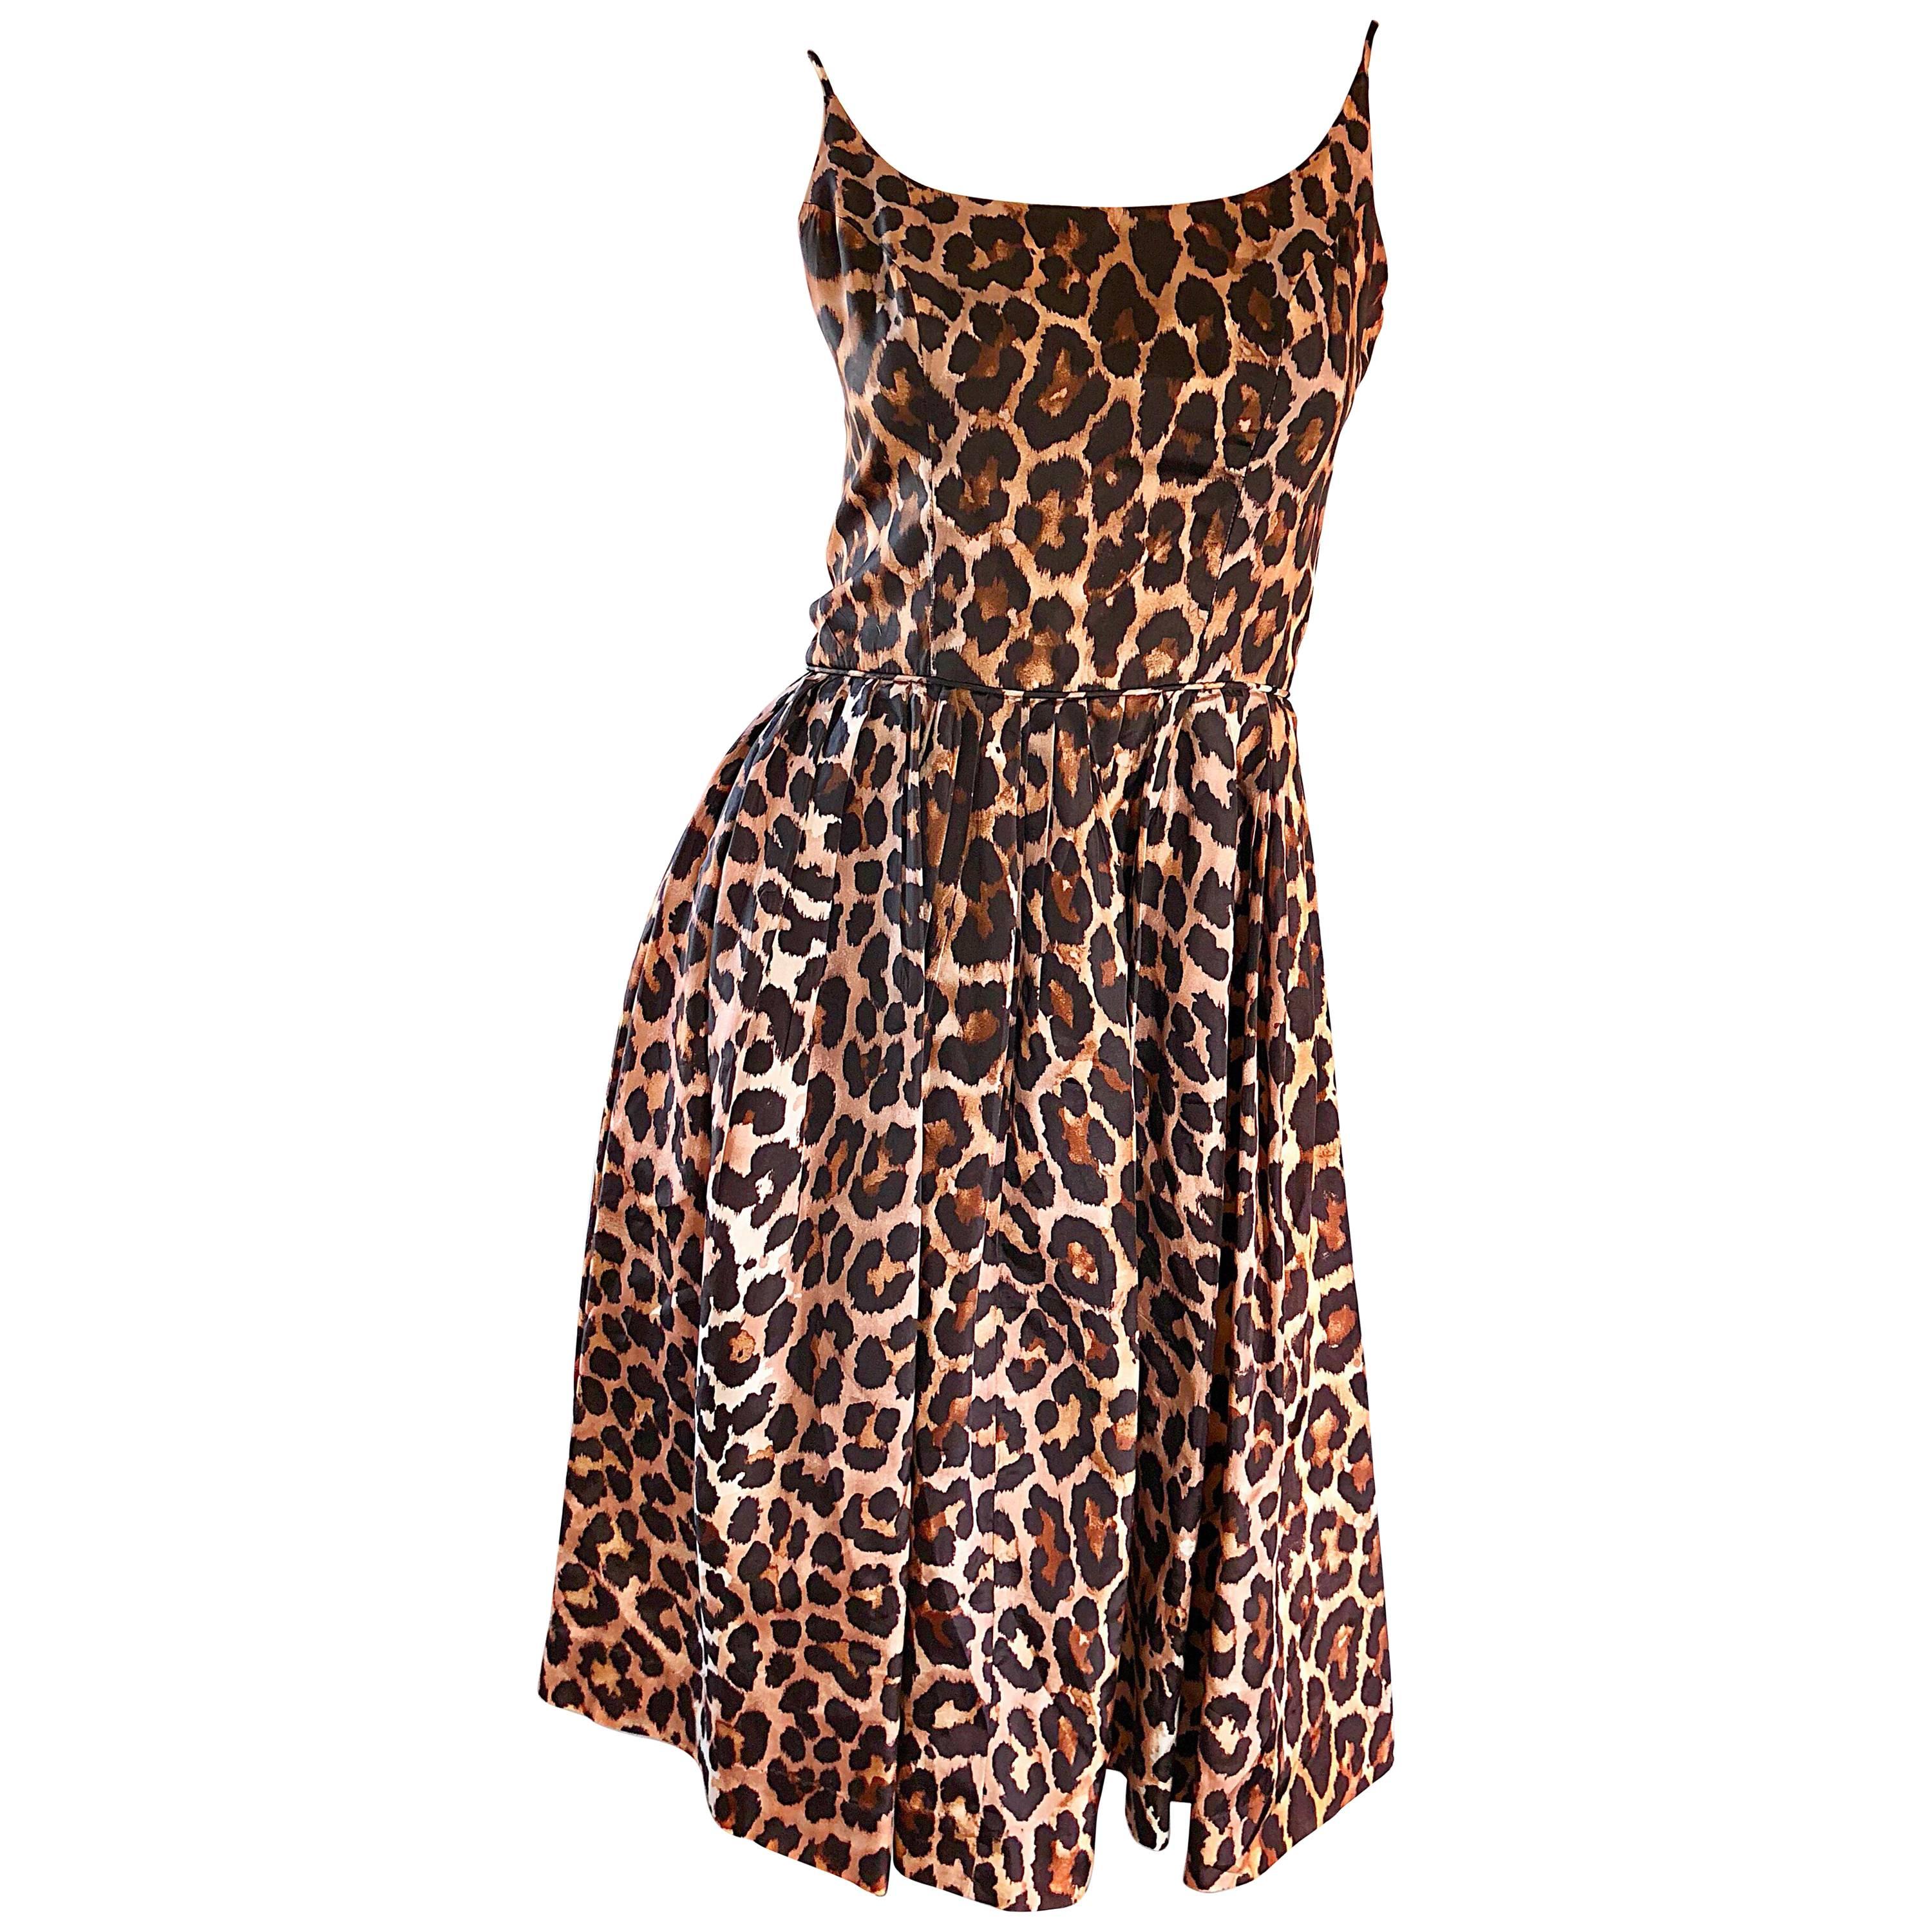 Gorgeous 1950s Demi Couture Leopard Cheetah Print Silk Fit n' Flare 50s Dress